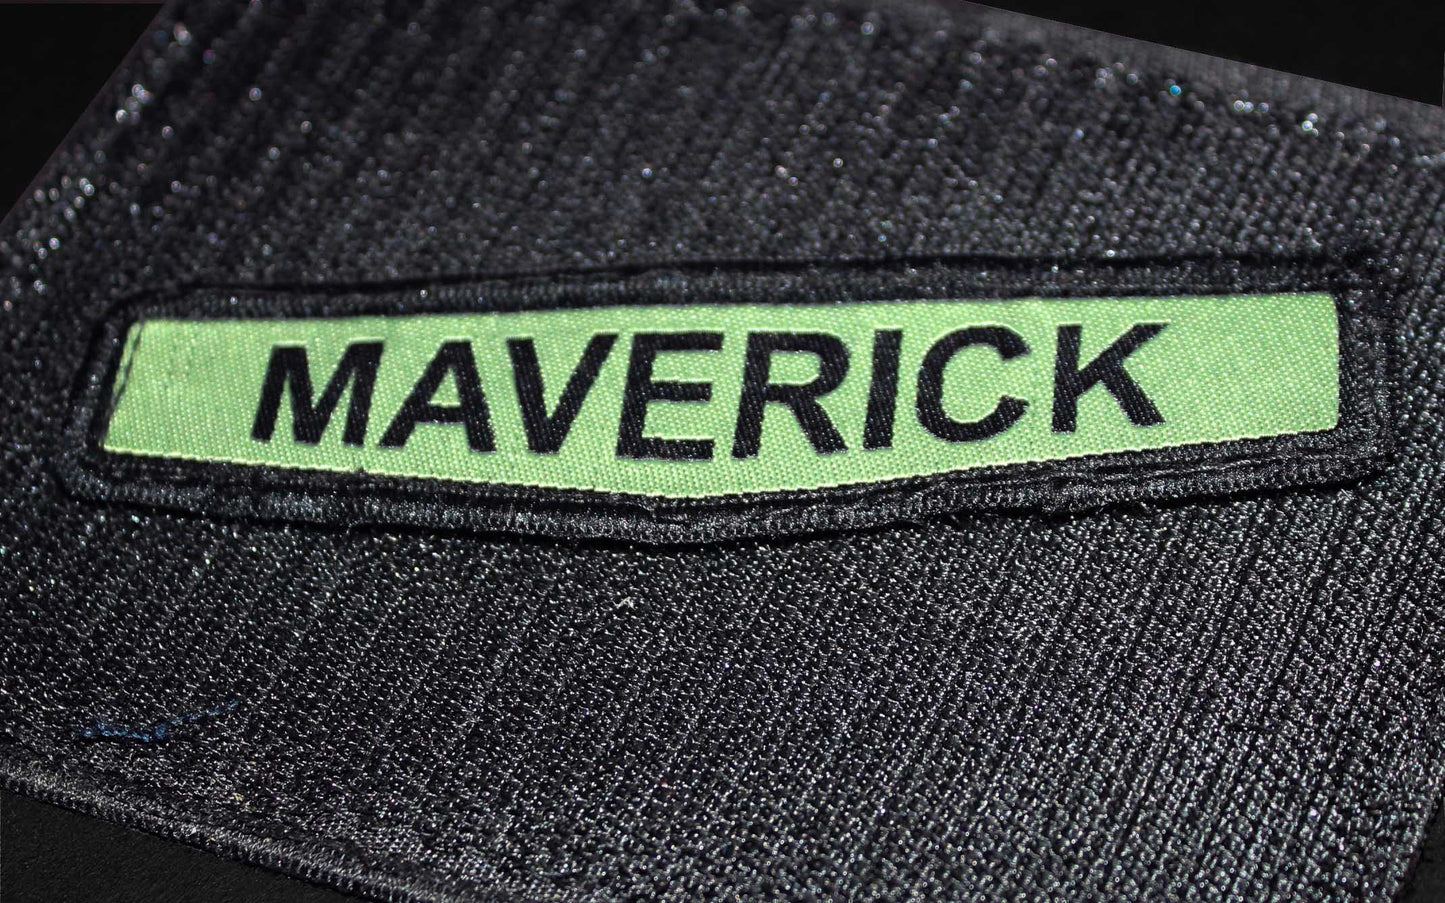 maverick velcro patches for jackets